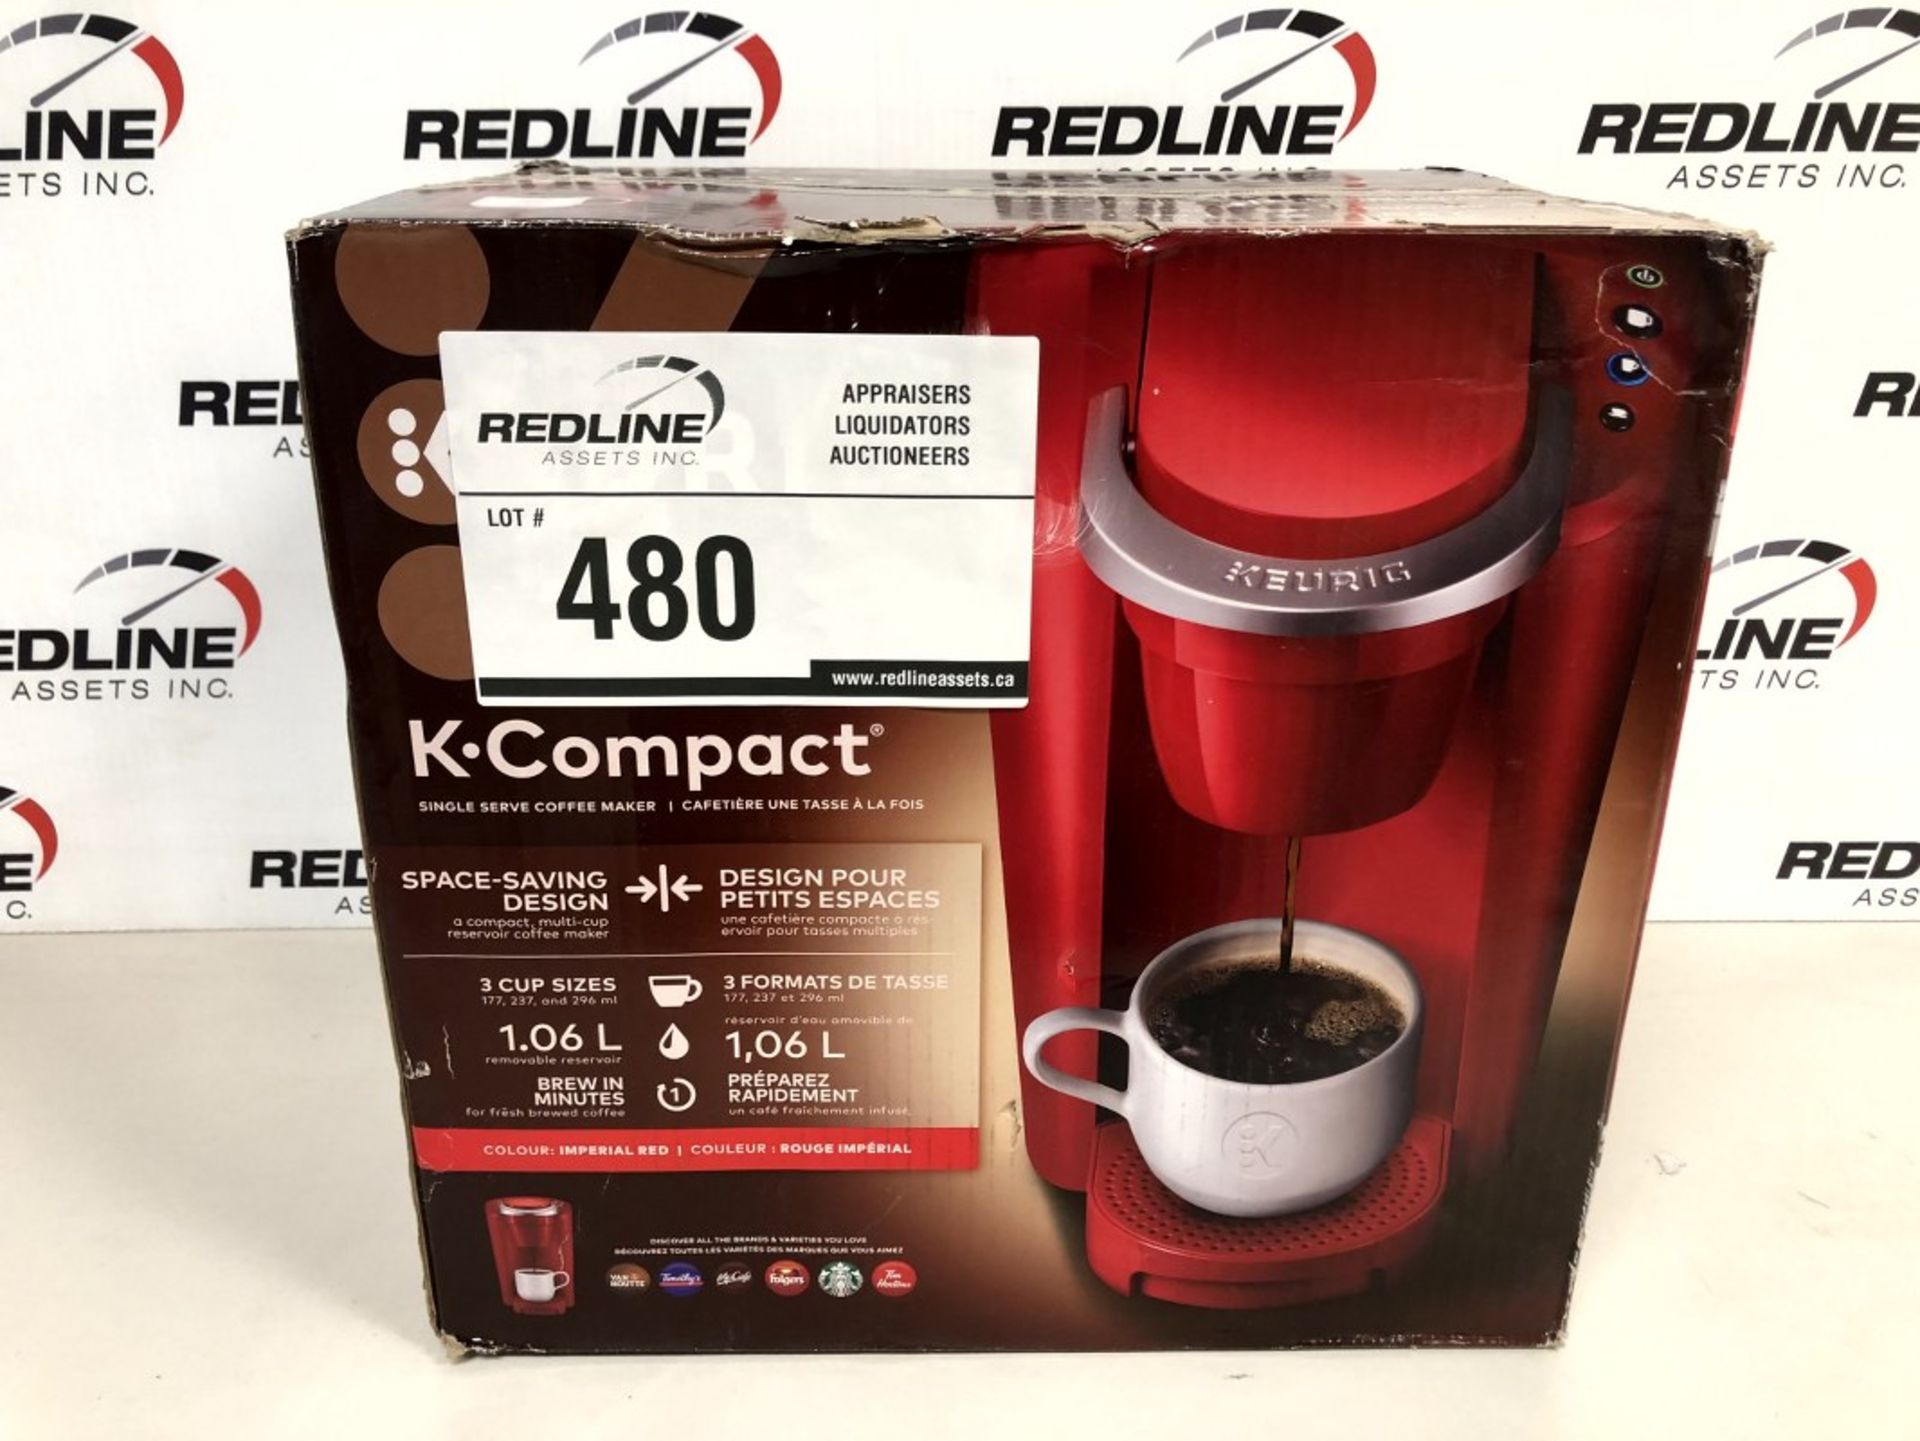 Keurig - Kcompact Single Serve Coffee Maker - 1.06L